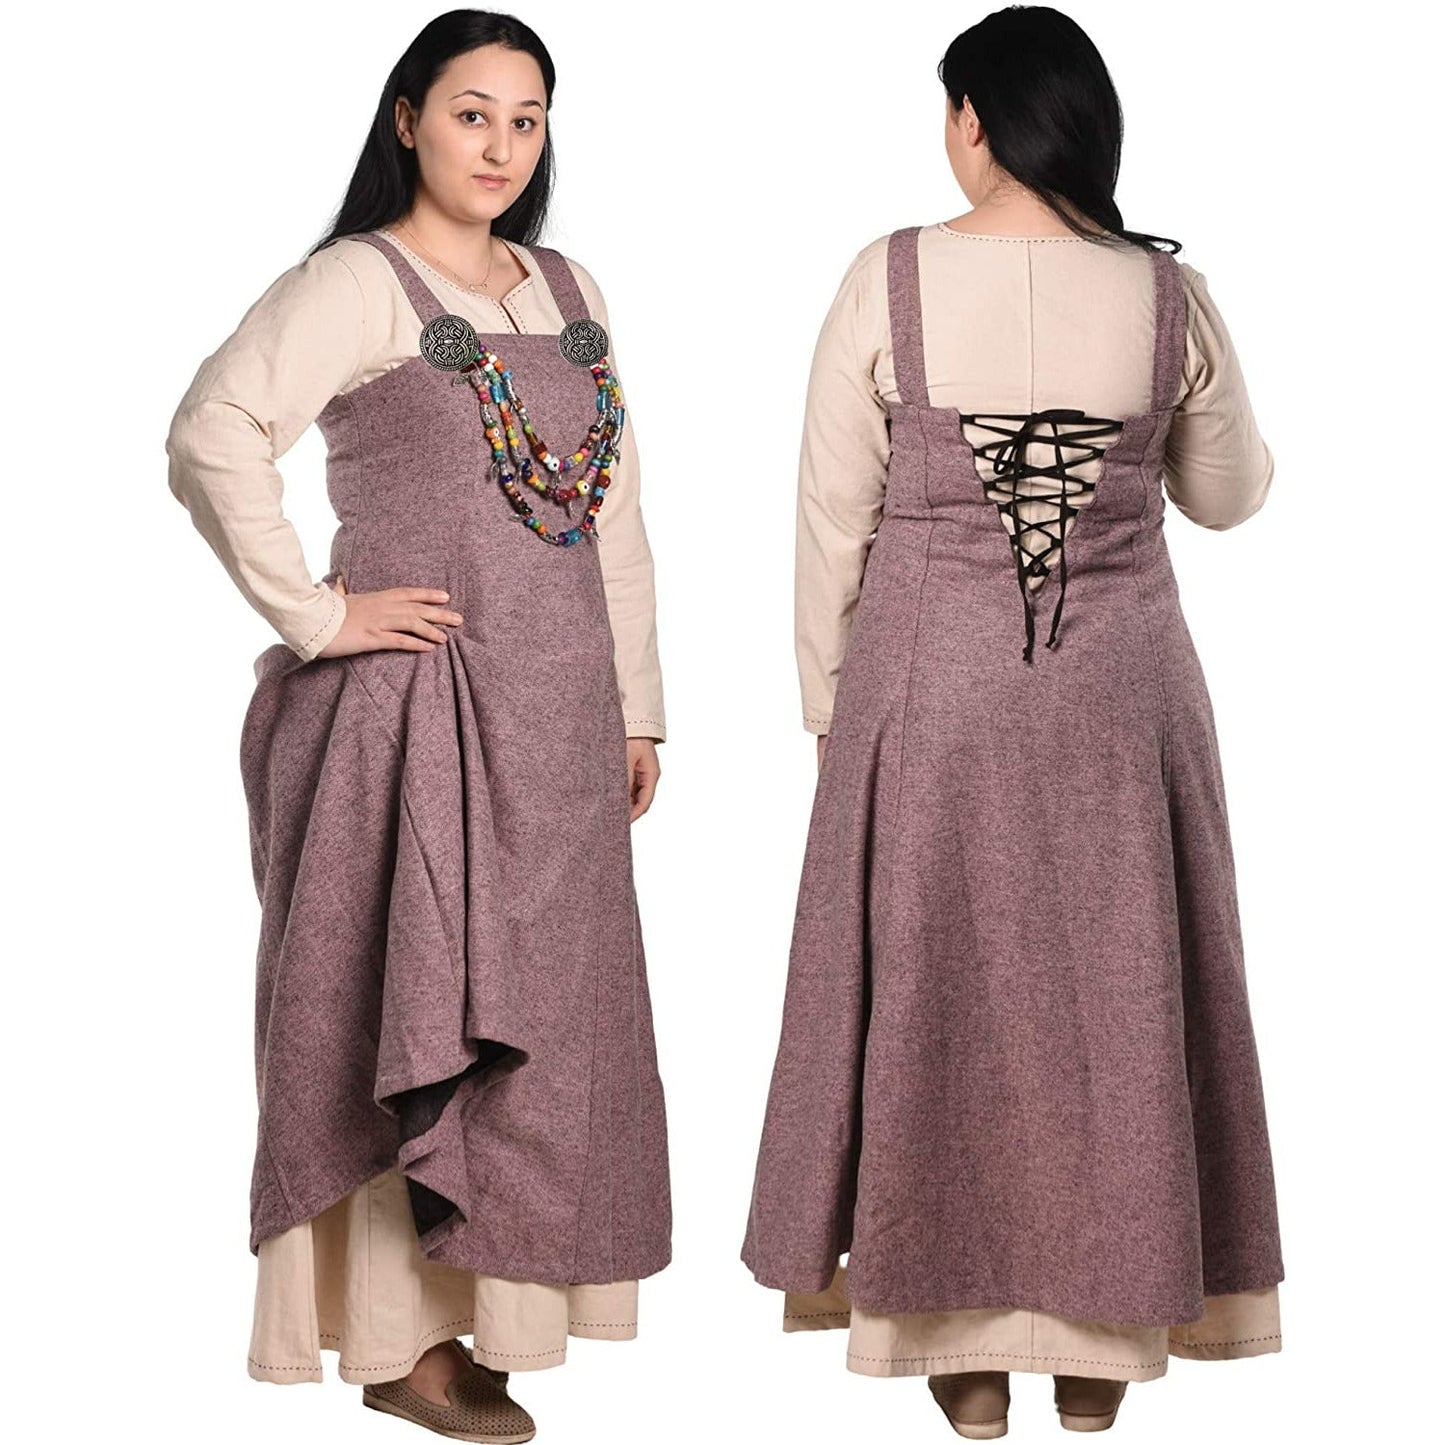 Vestido delantal vikingo en lana con cordones traseros - Vestido túnica vikingo